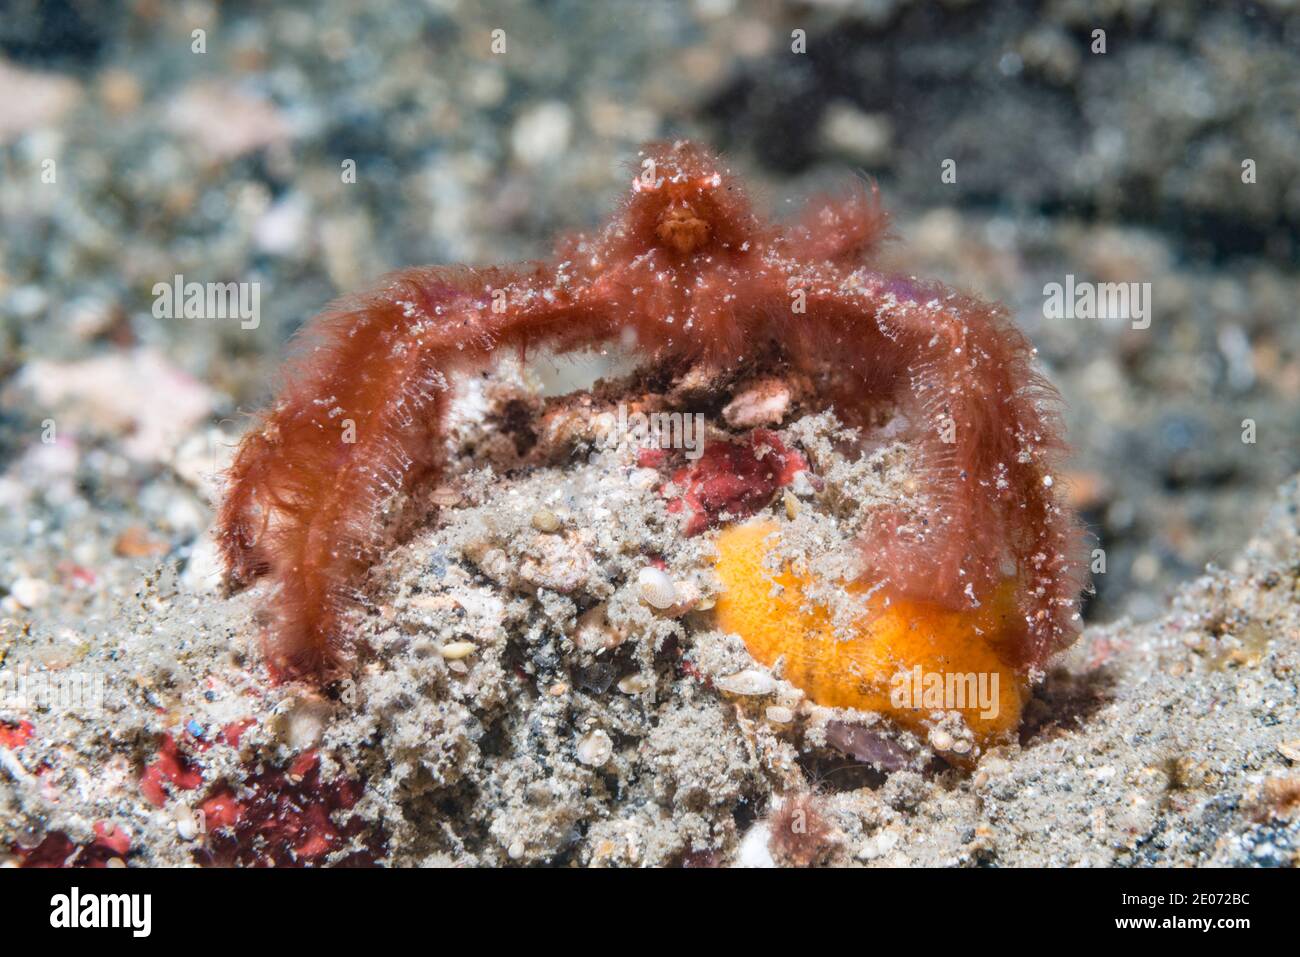 Orangutan crab [Oncinopus species].  Lembeh Strait, North Sulawesi, Indonesia. Stock Photo